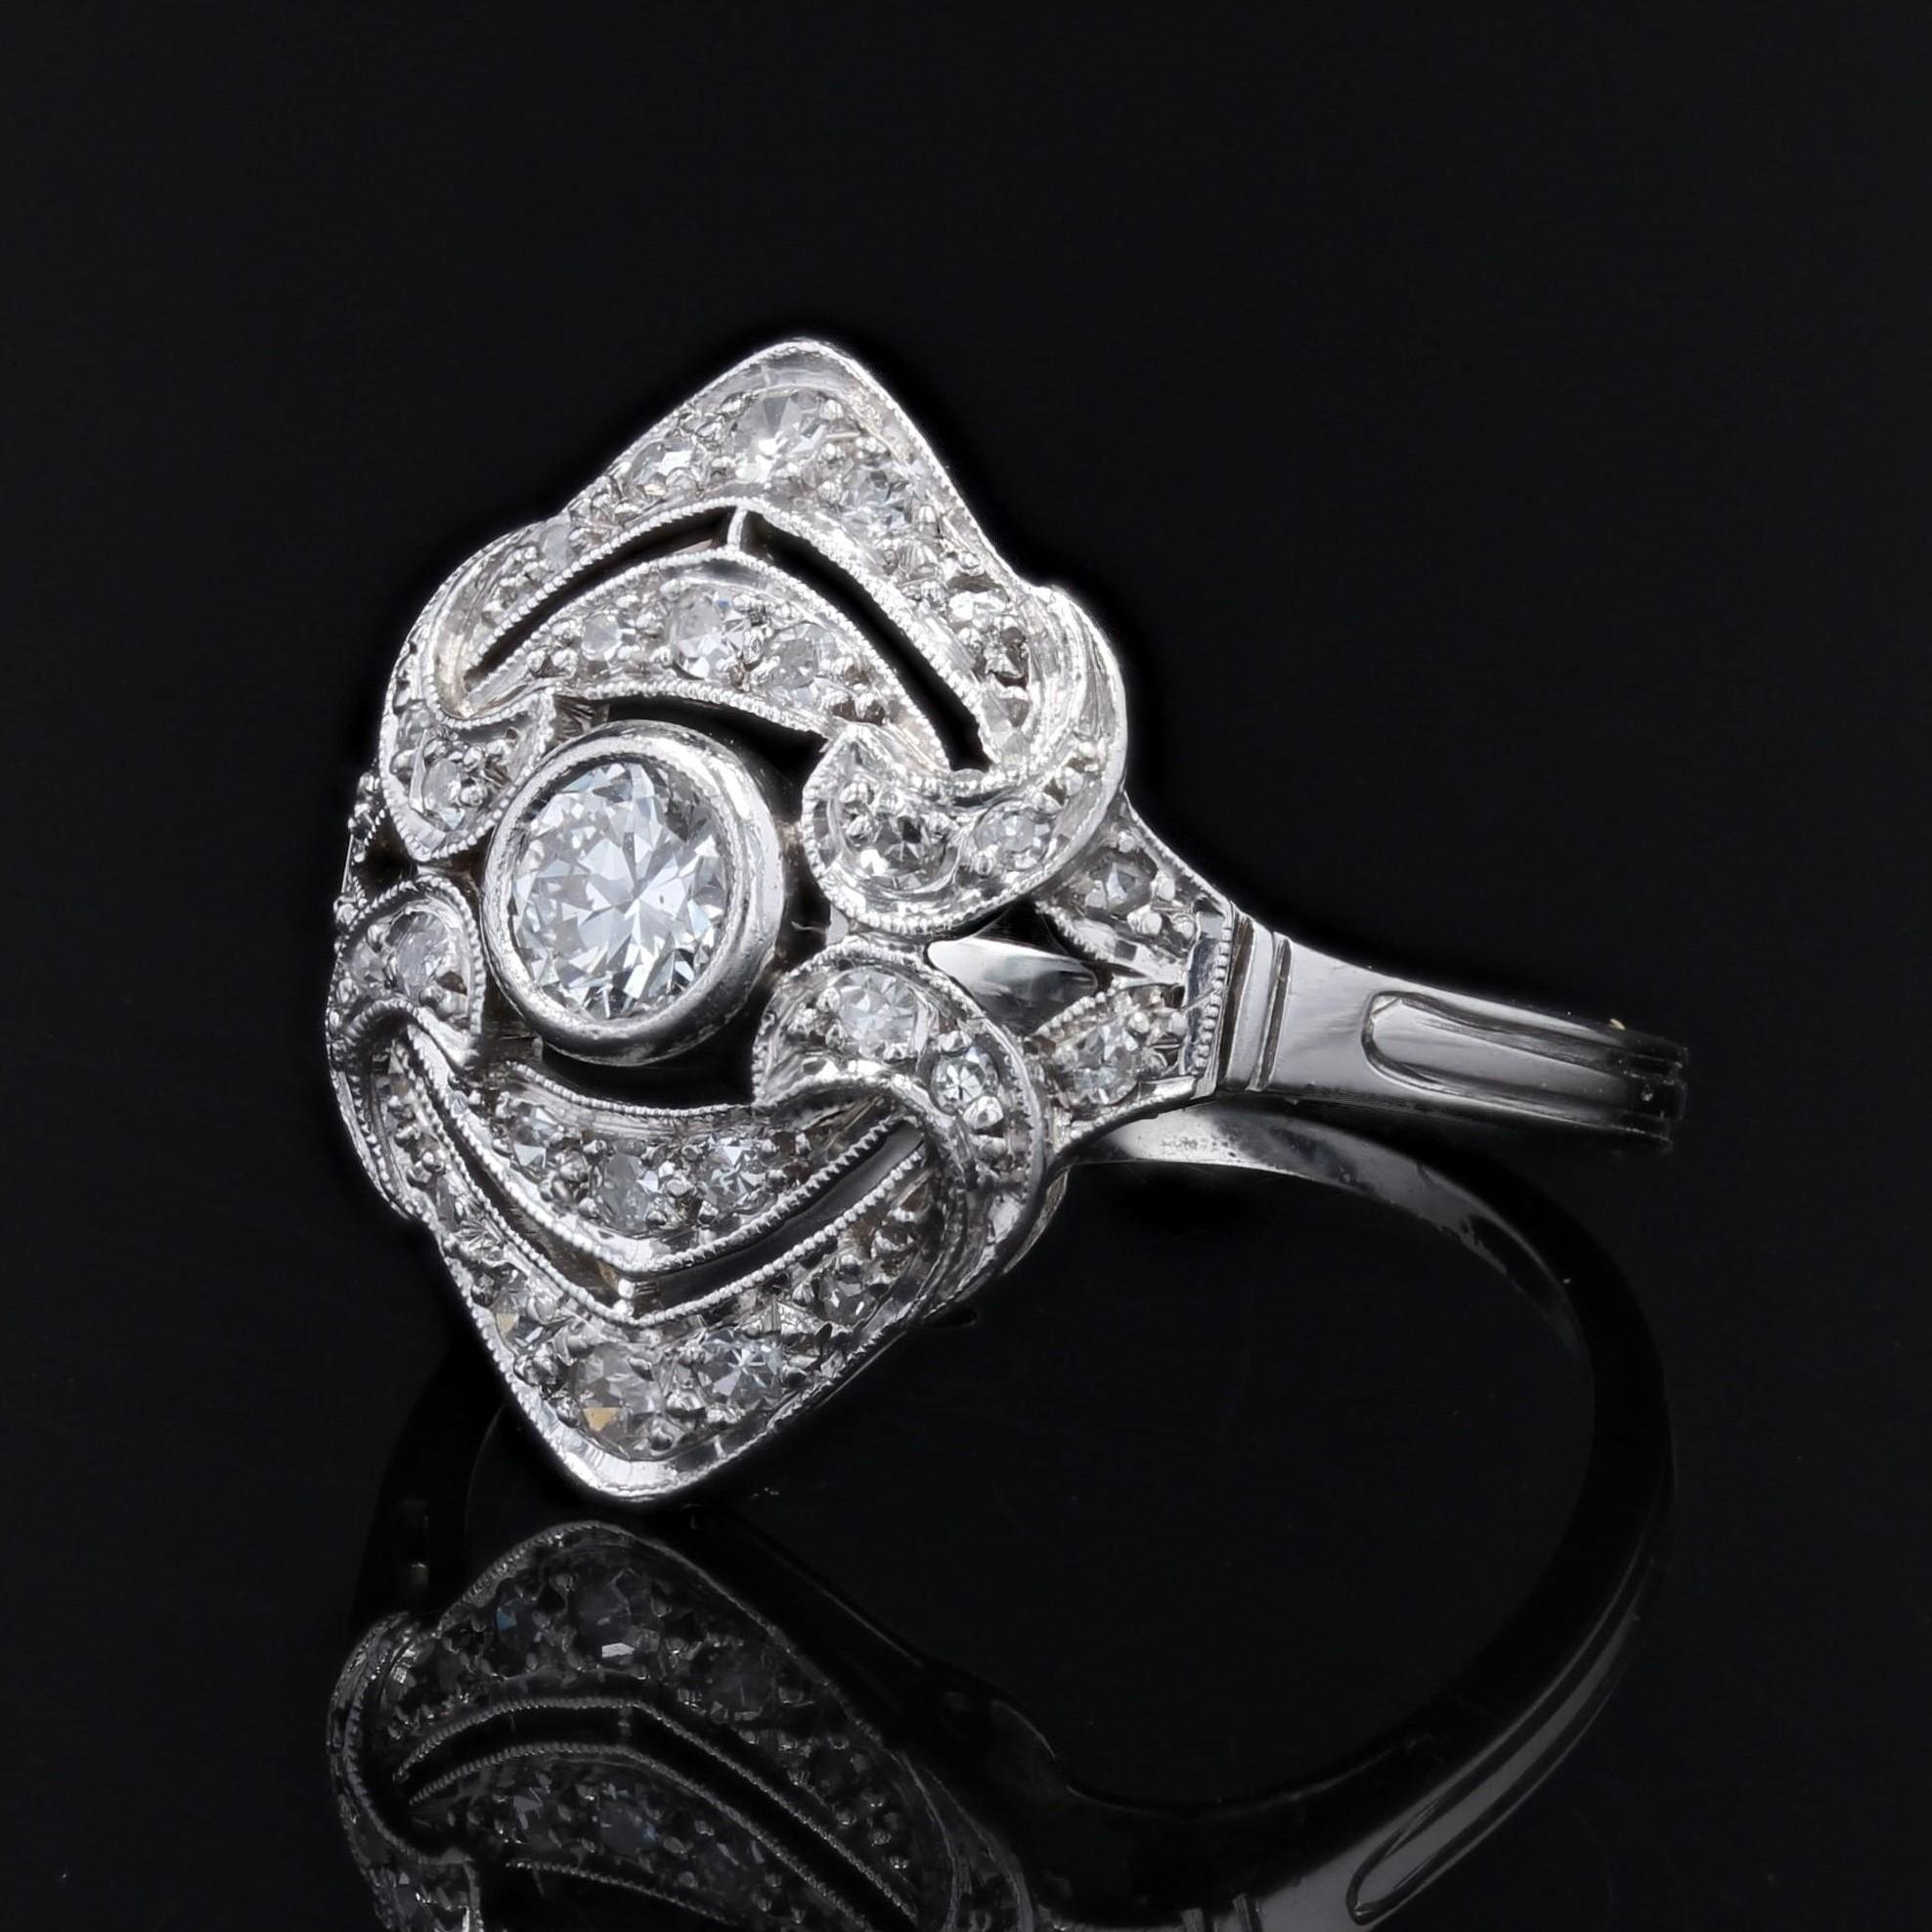 French 1930s Art Deco Style Diamonds 18 Karat White Gold Ring For Sale 1